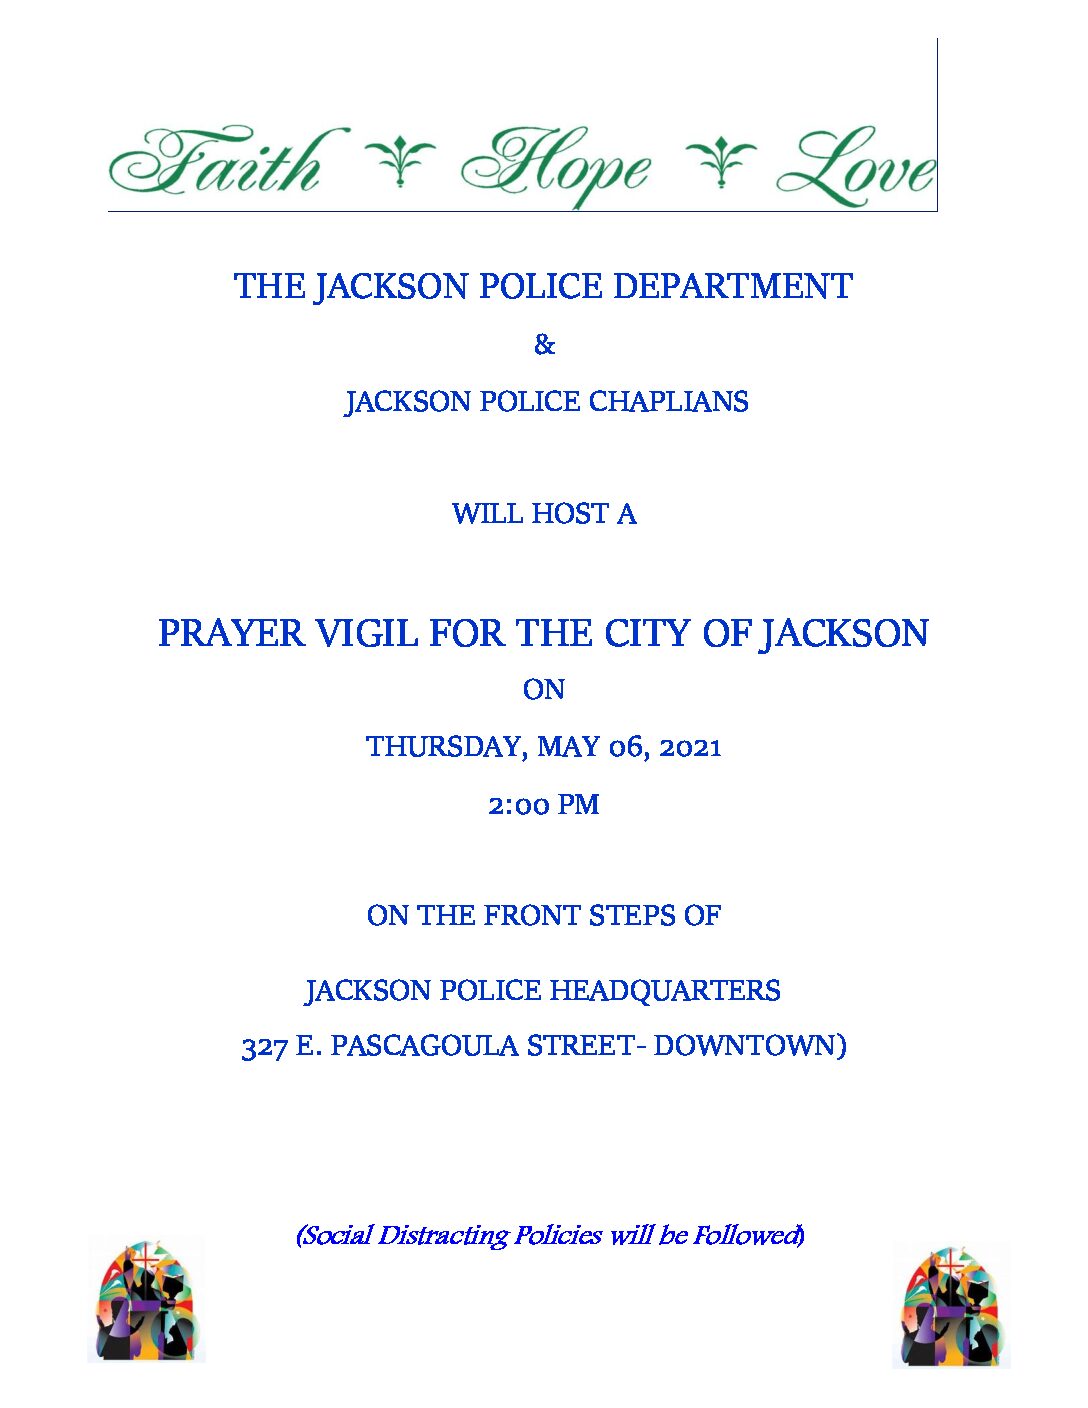 Prayer Vigil for the City of Jackson